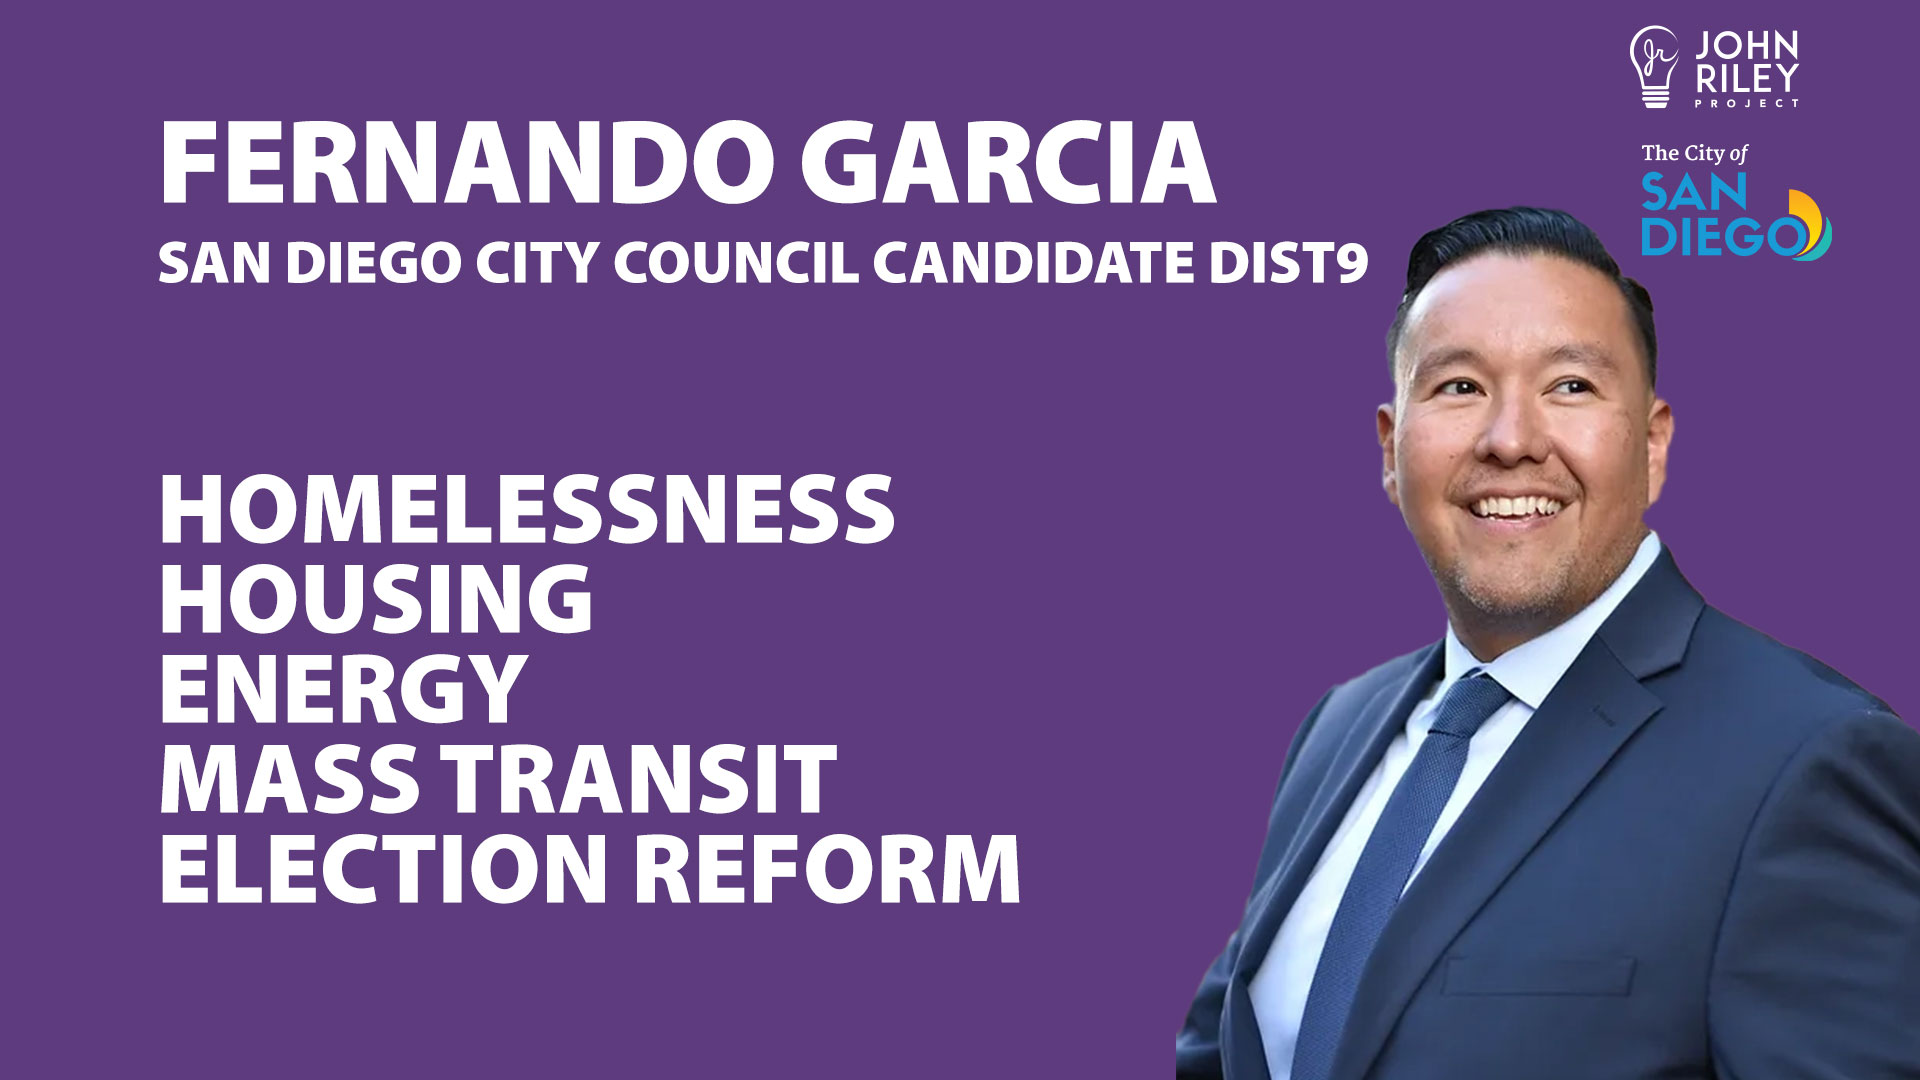 John Riley discusses Fernando Garcia, San Diego City Council Candidate, District 9